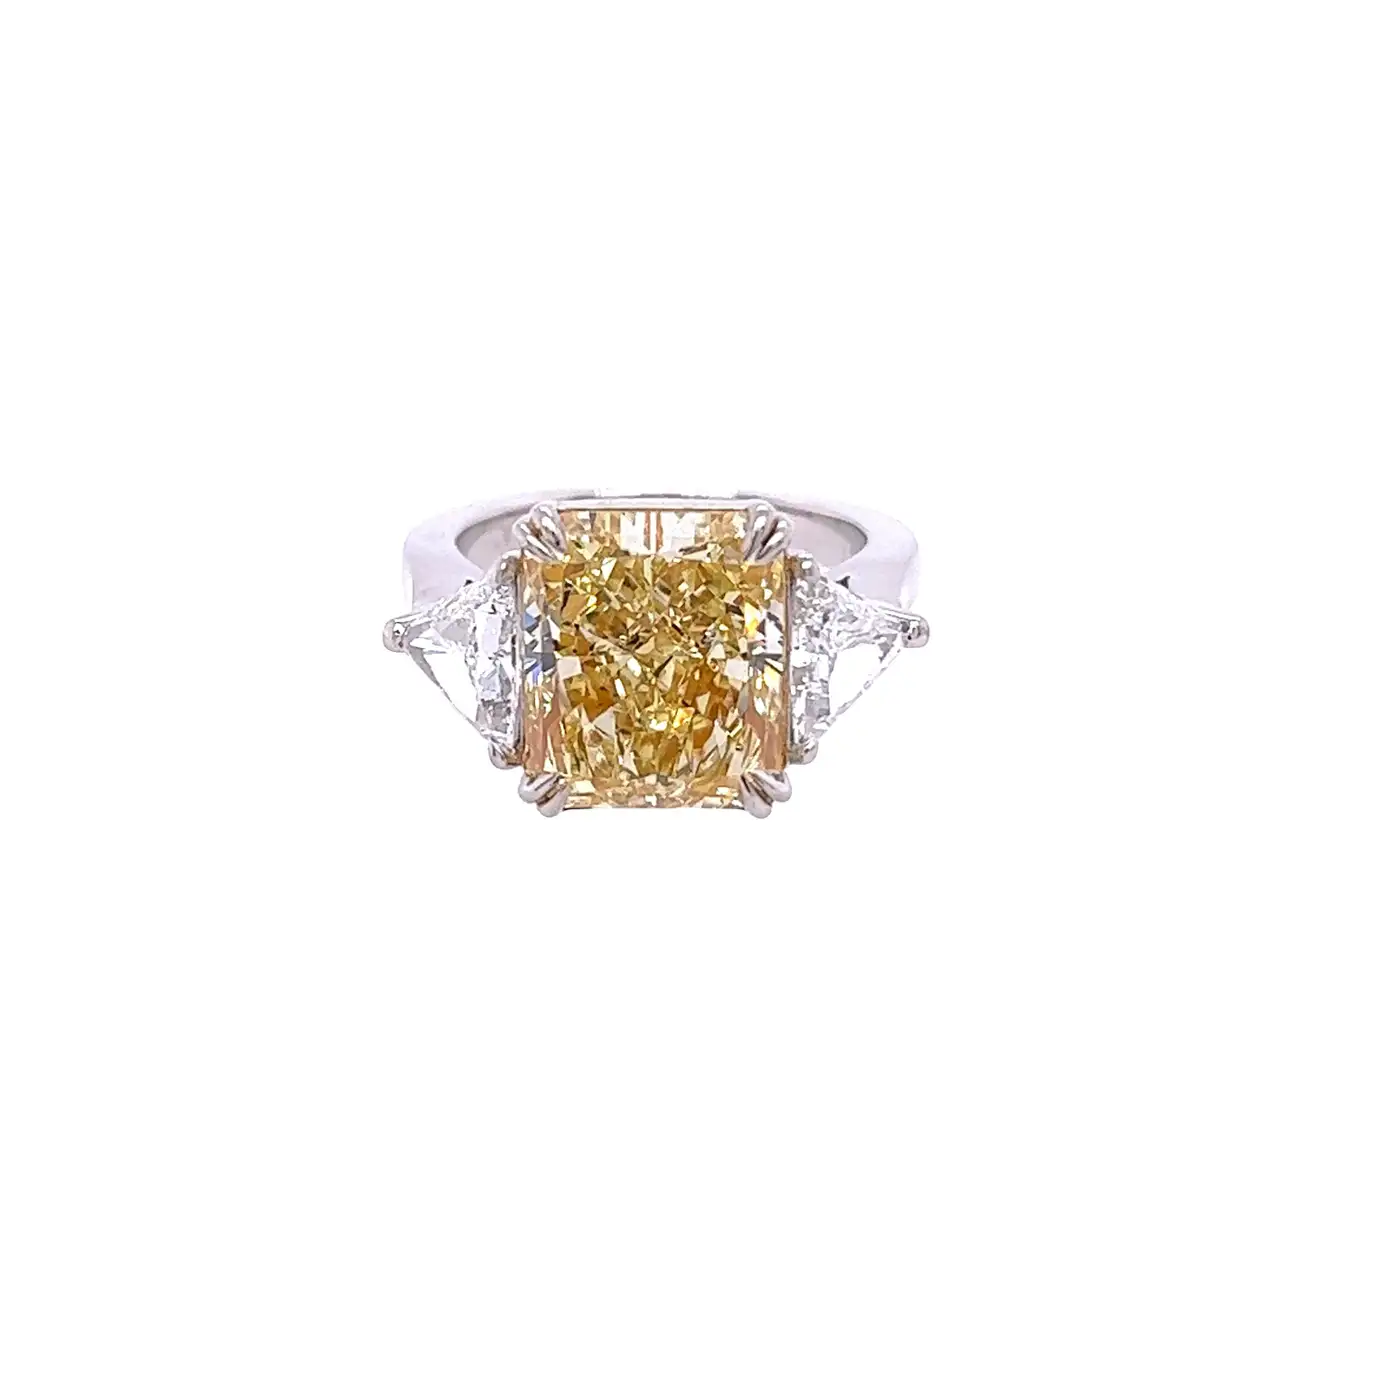 David-Rosenberg-5.68-ct-Fancy-Light-Yellow-Radiant-GIA-Diamond-Engagement-Ring-6.webp